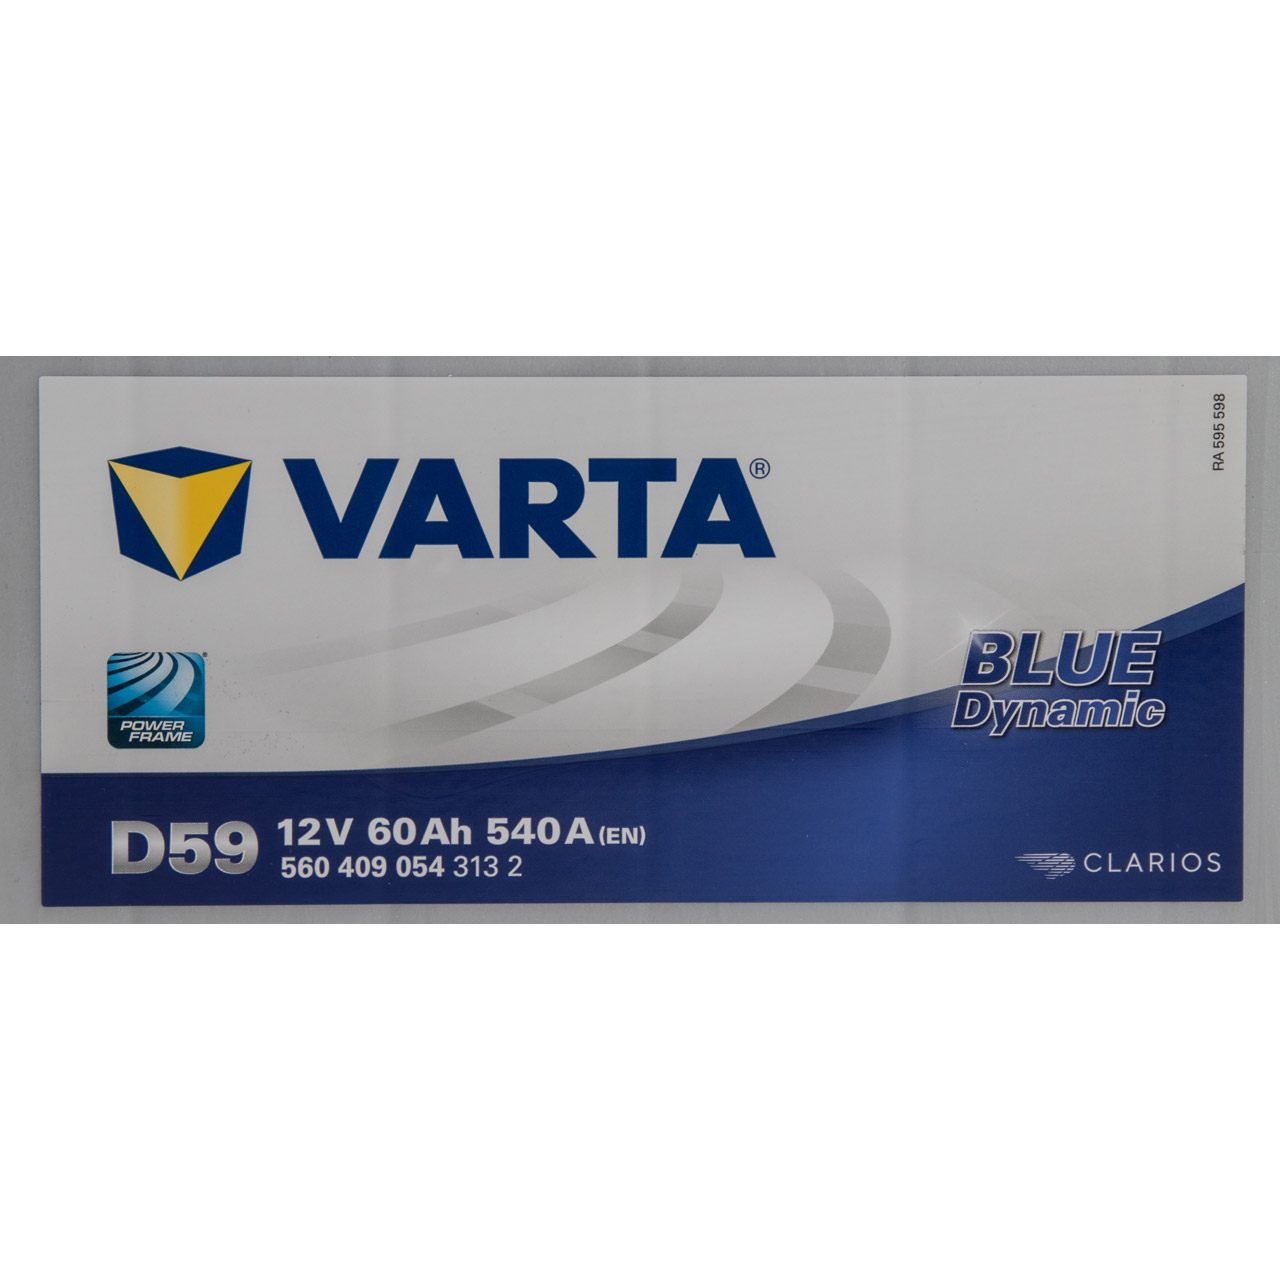 5604090543132 VARTA D59 BLUE dynamic D59 Batterie 12V 60Ah 540A